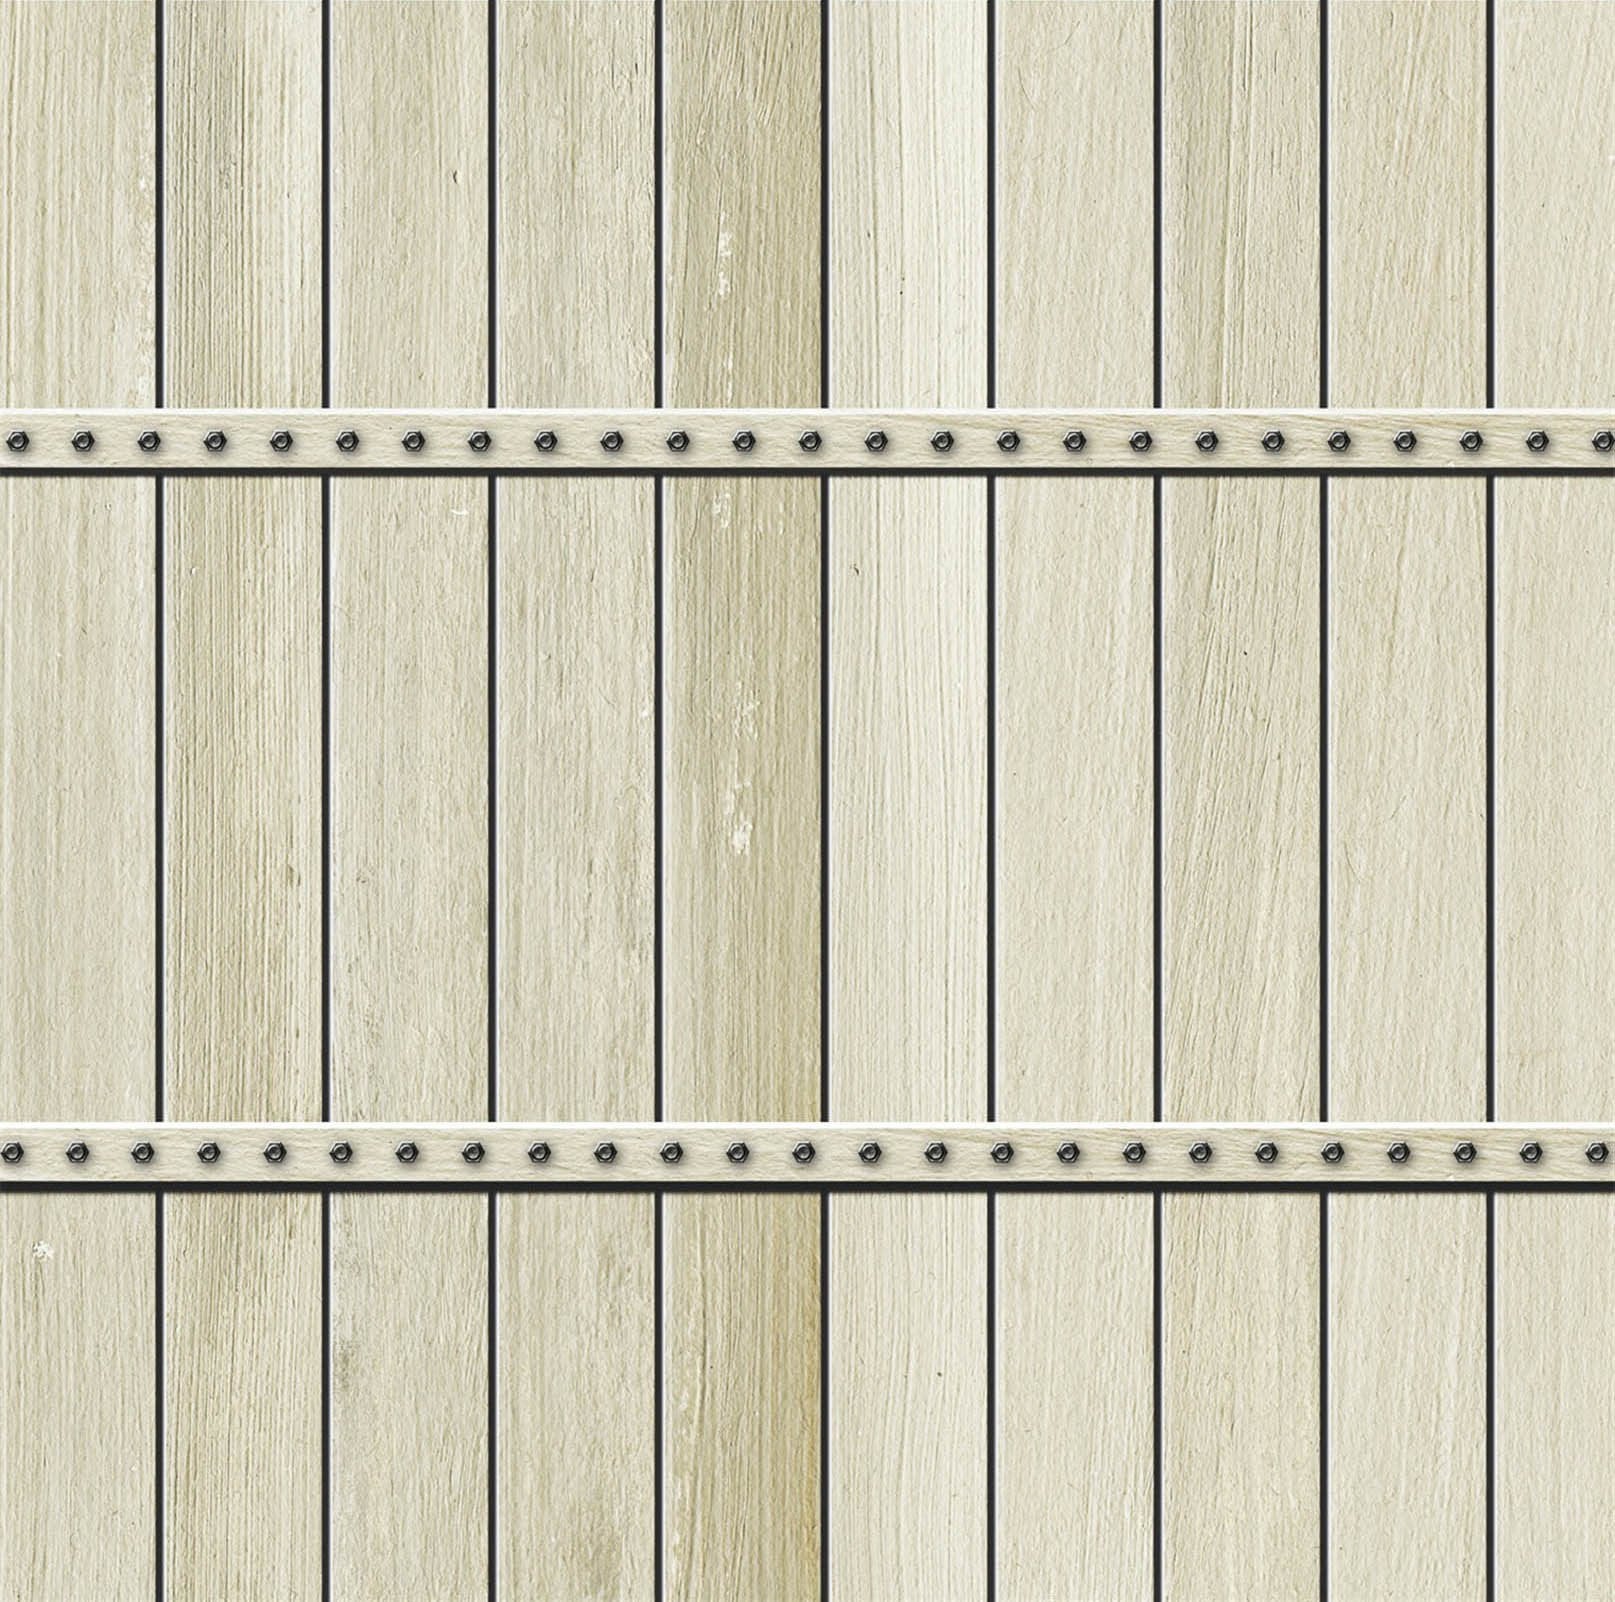 3D Wood Boards 548 Kitchen Mat Floor Mural Wallpaper AJ Wallpaper 